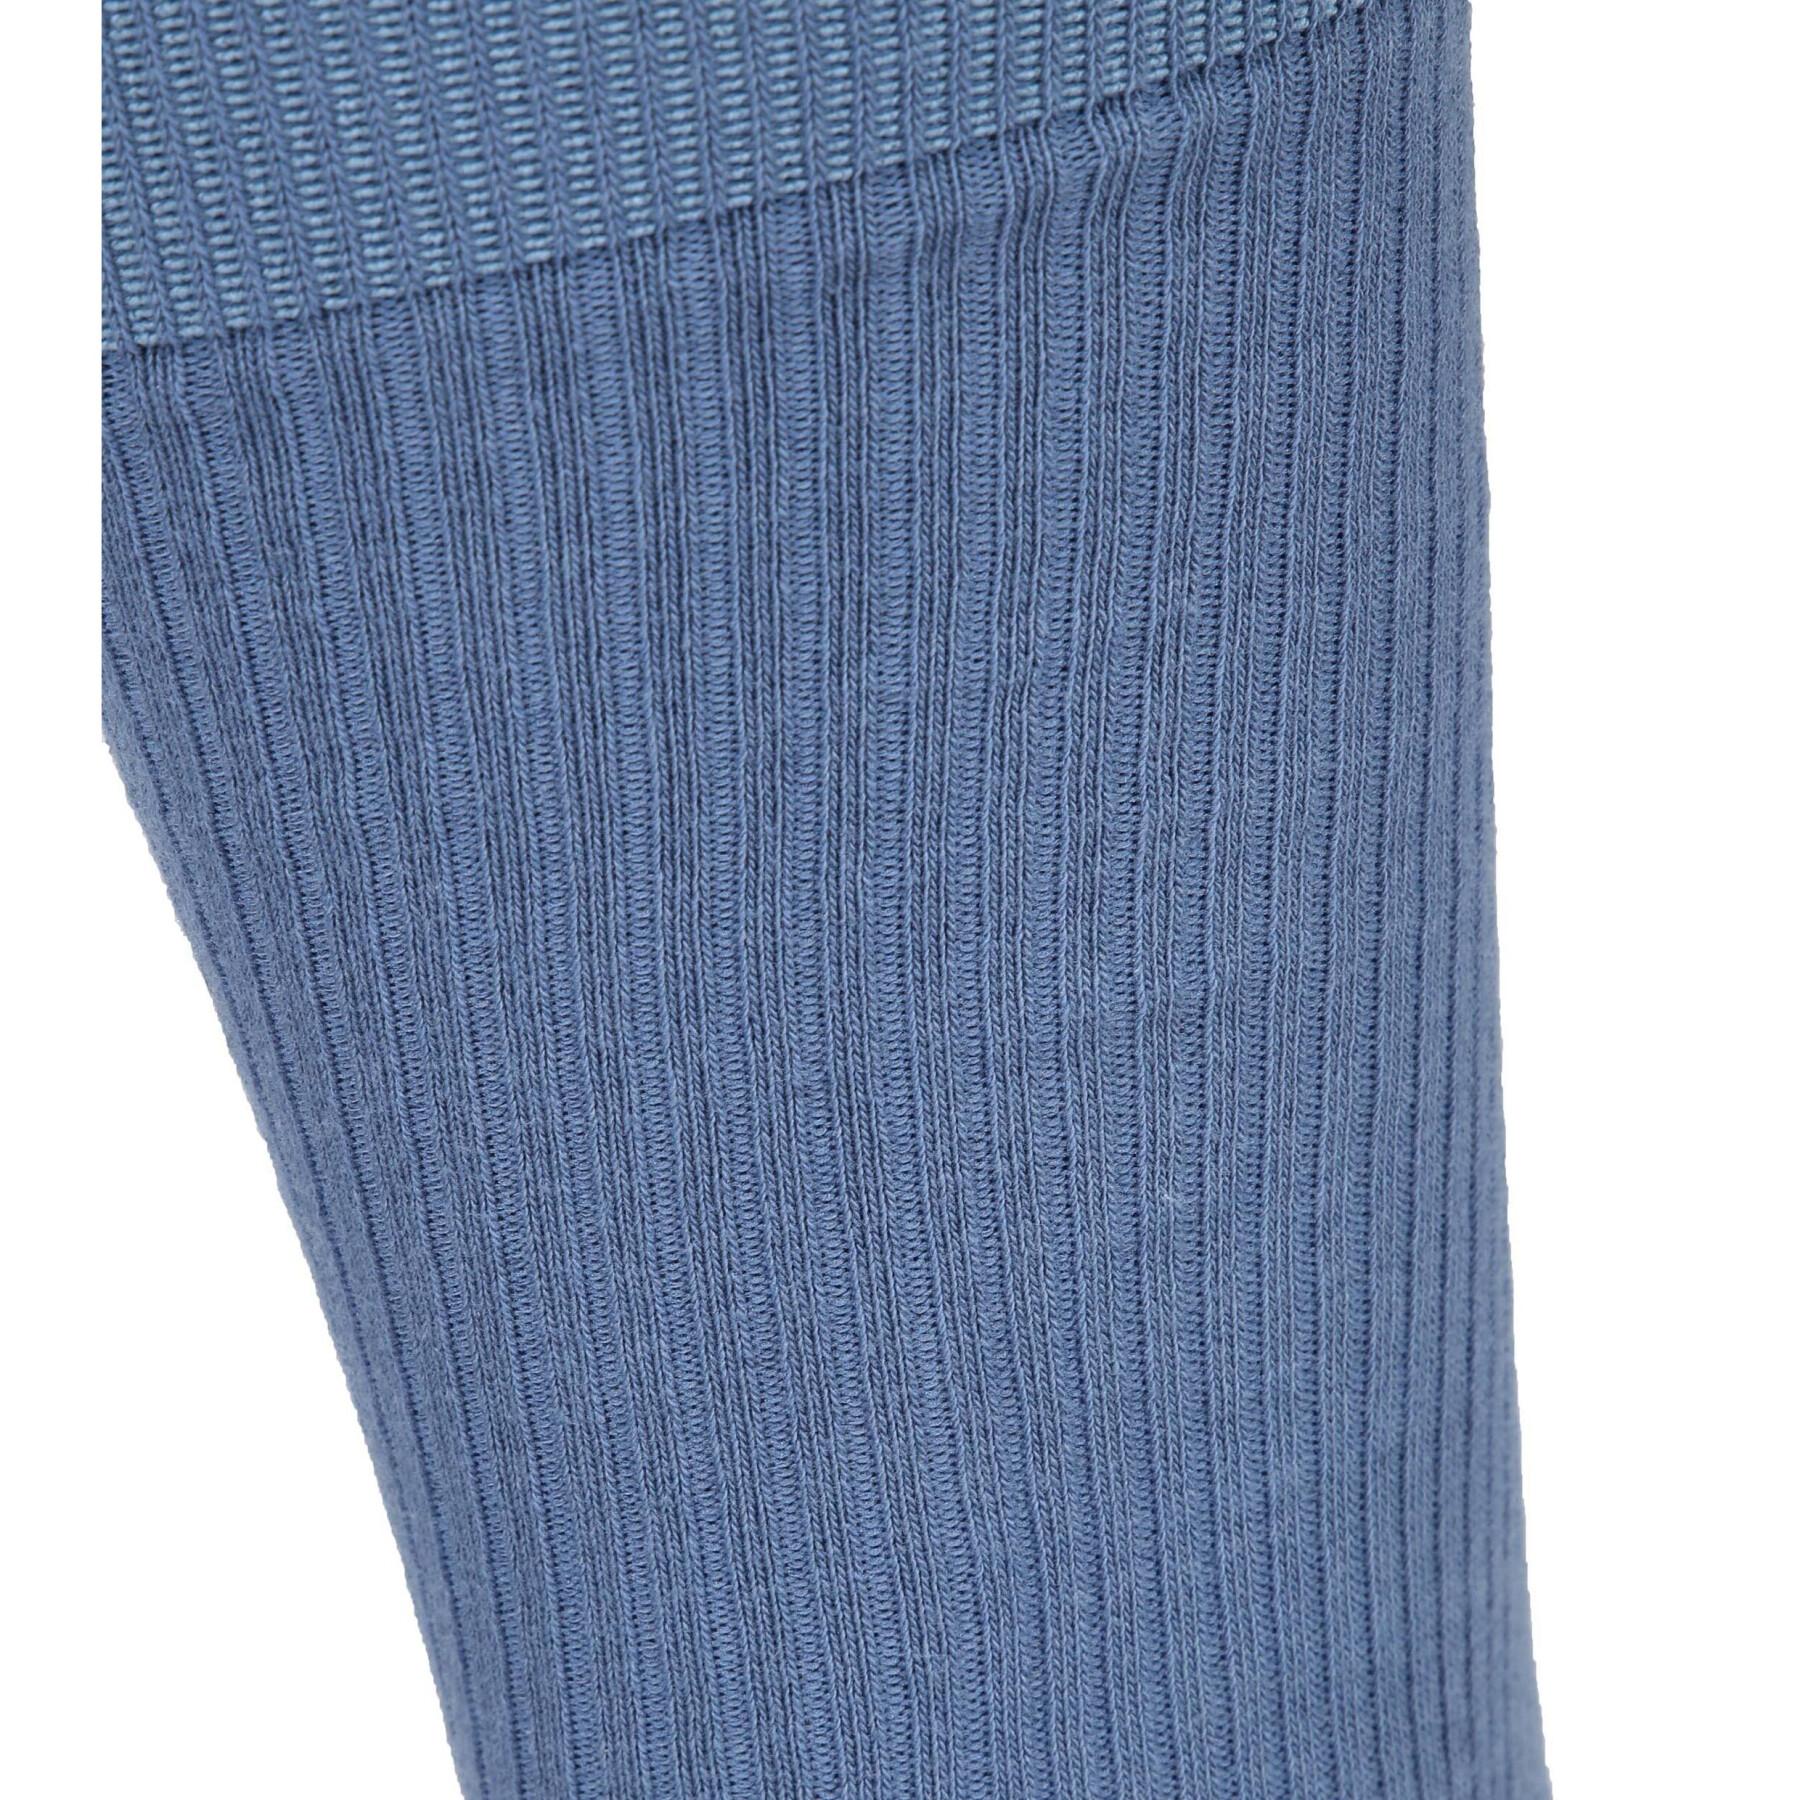 Socks Colorful Standard Classic Organic petrol blue